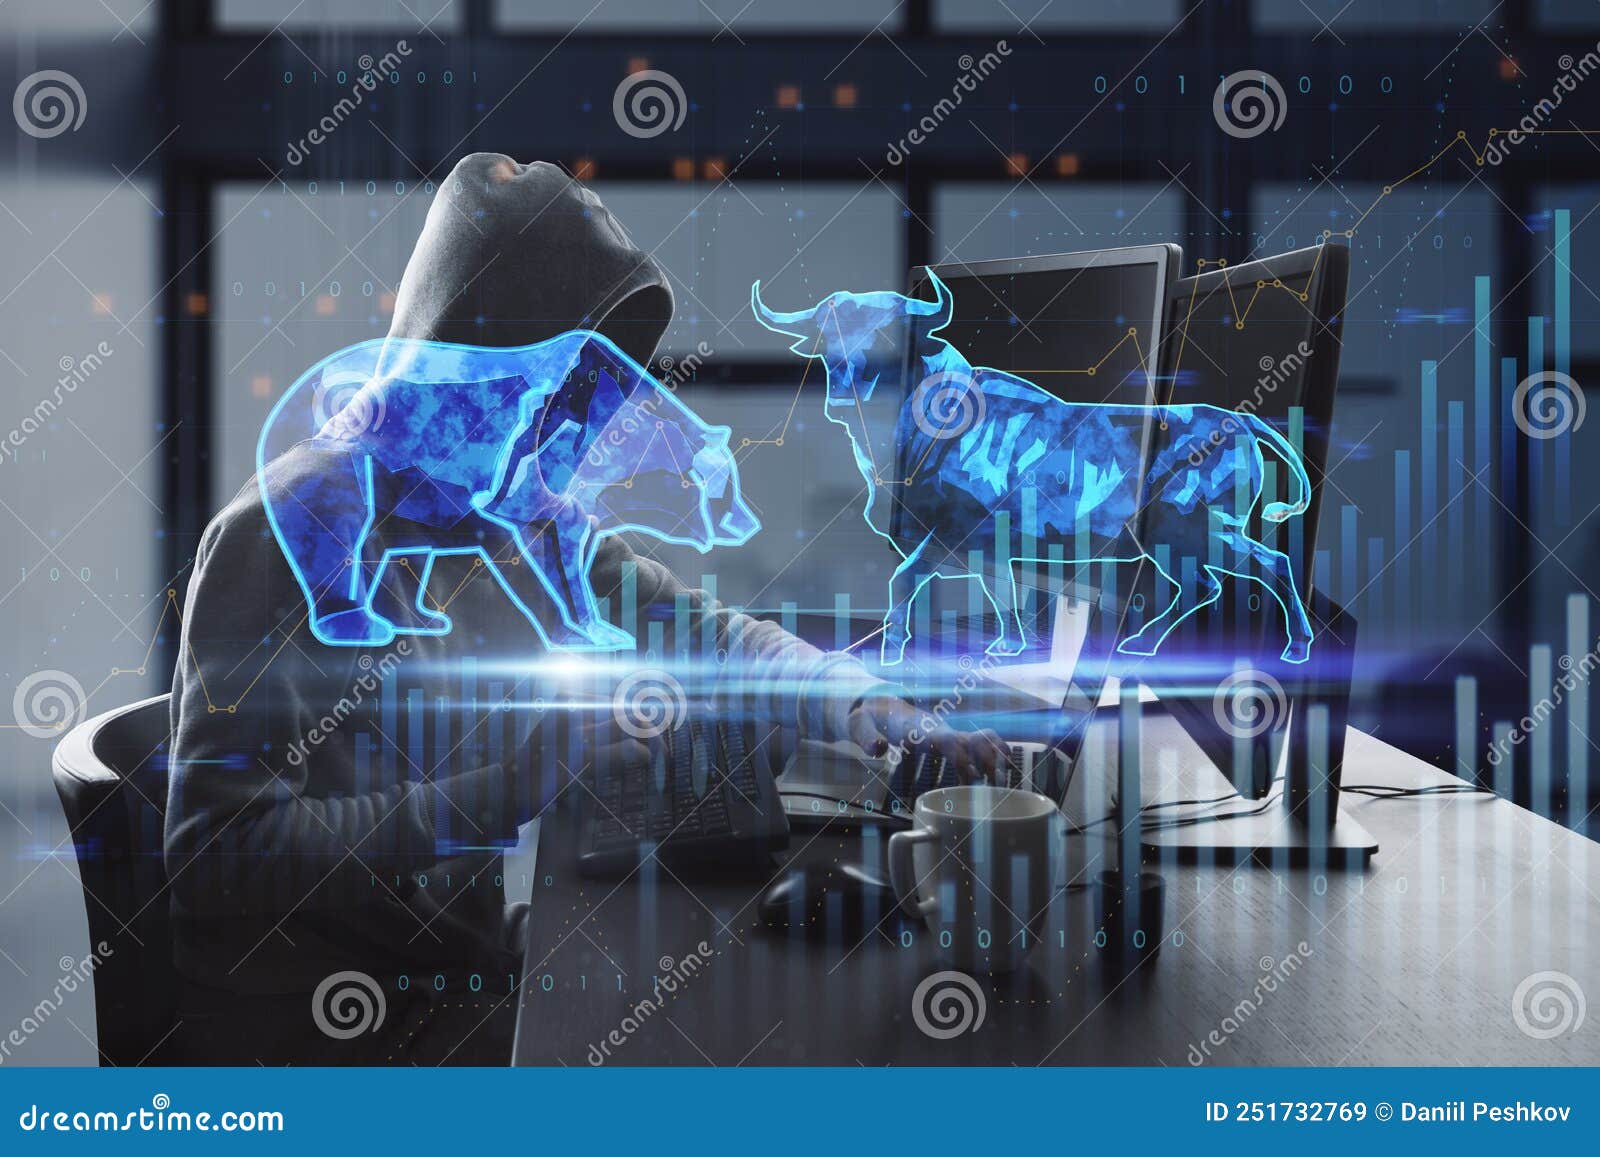 26239 Bull Bear Images Stock Photos  Vectors  Shutterstock